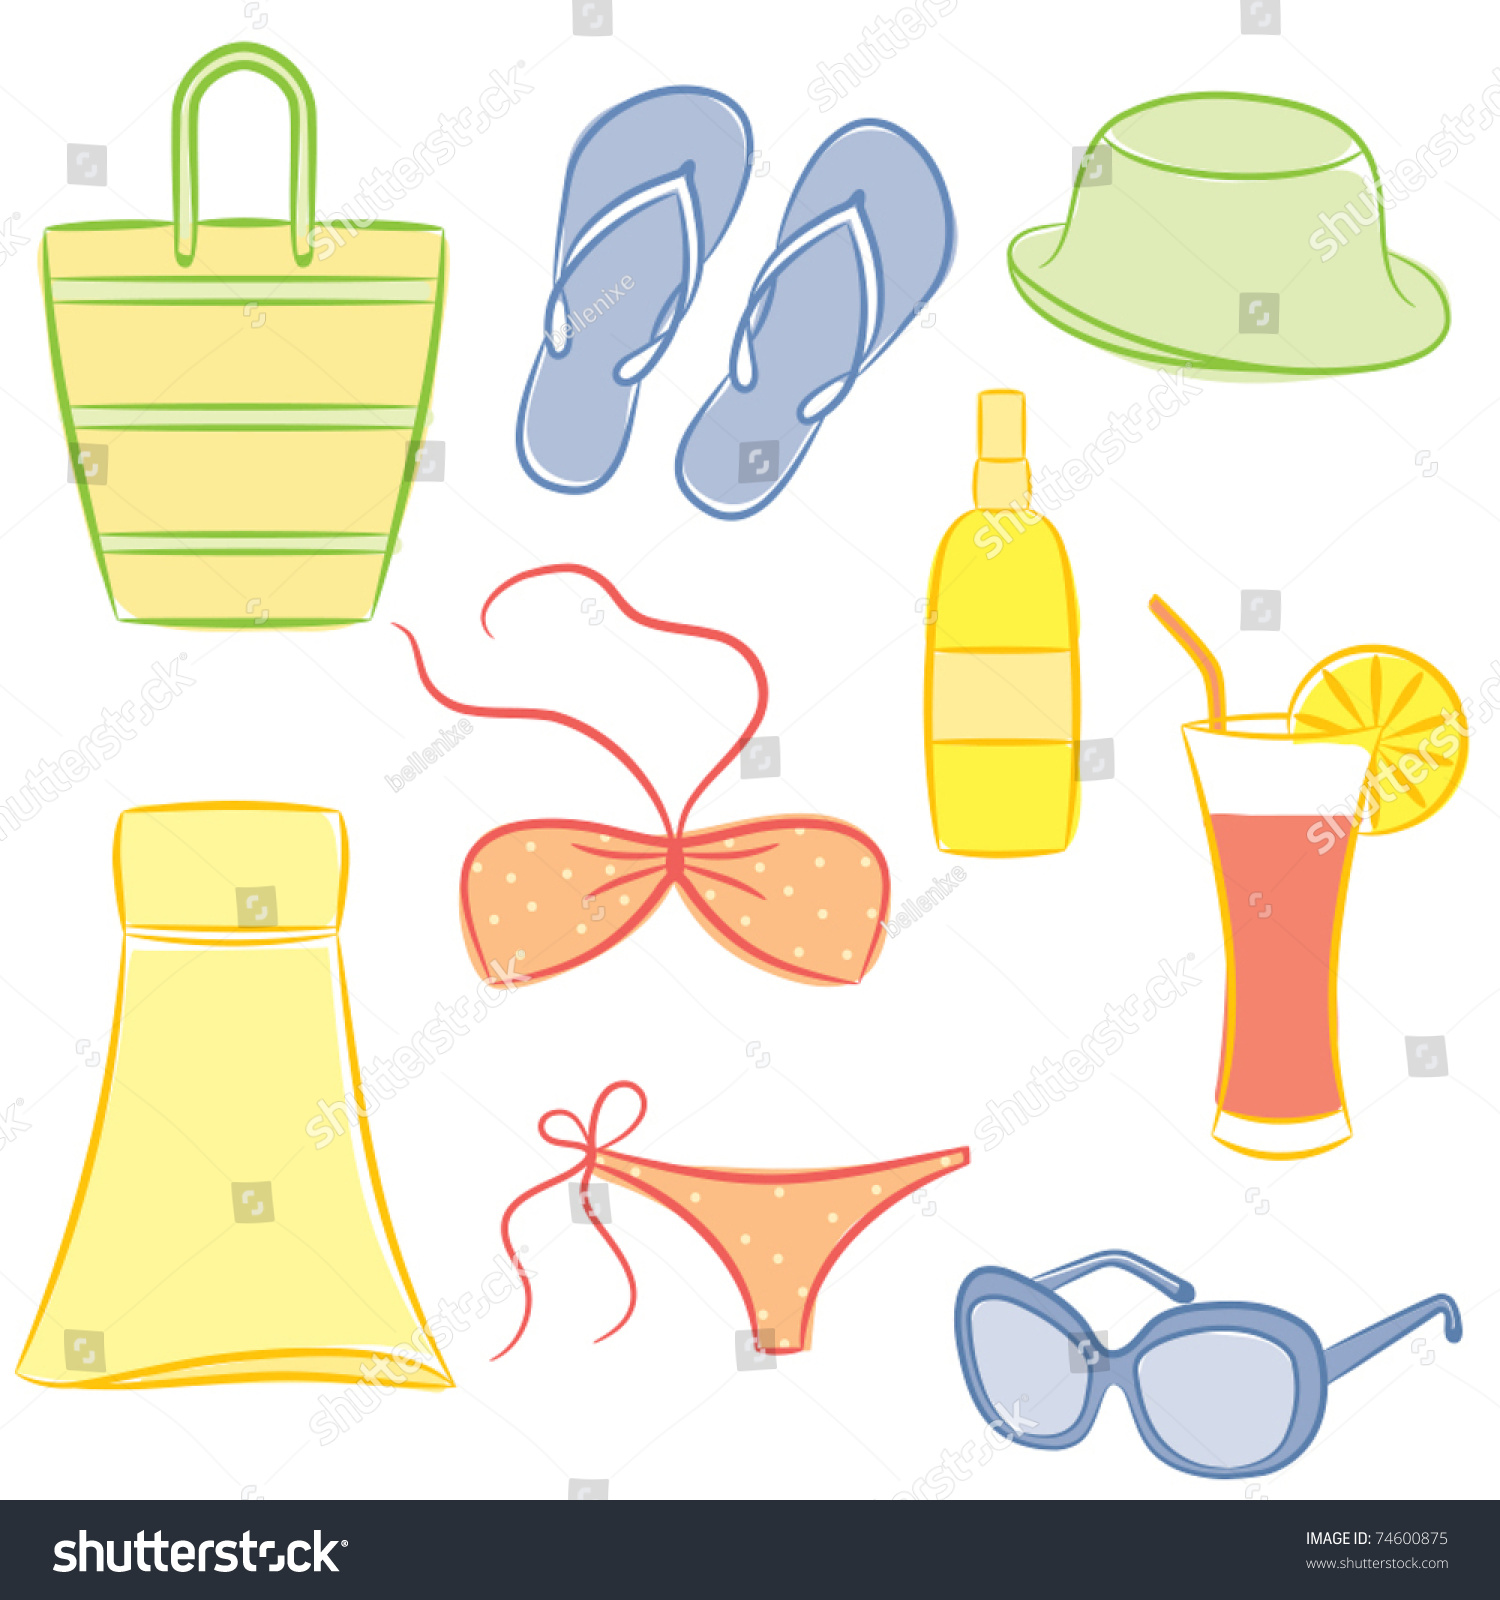 Set Of Beach Accessories. Vector Illustration. - 74600875 : Shutterstock